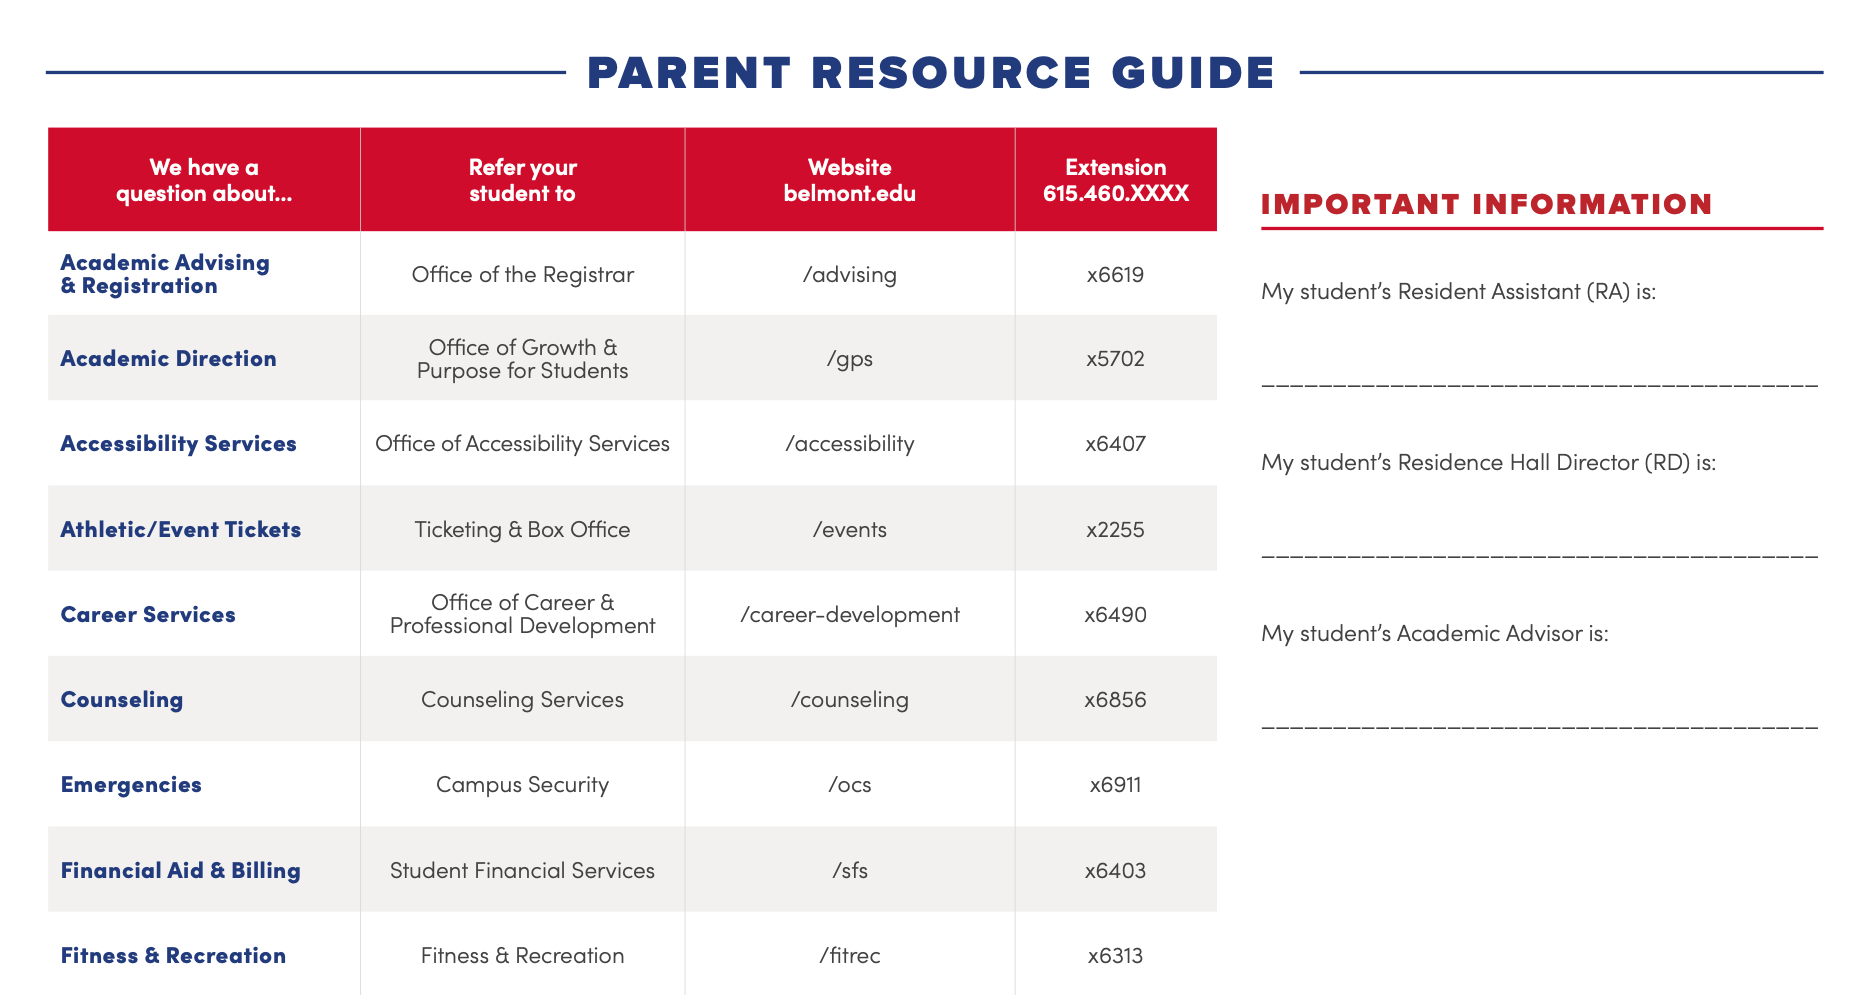 A screenshot of the Parent Resource Guide PDF